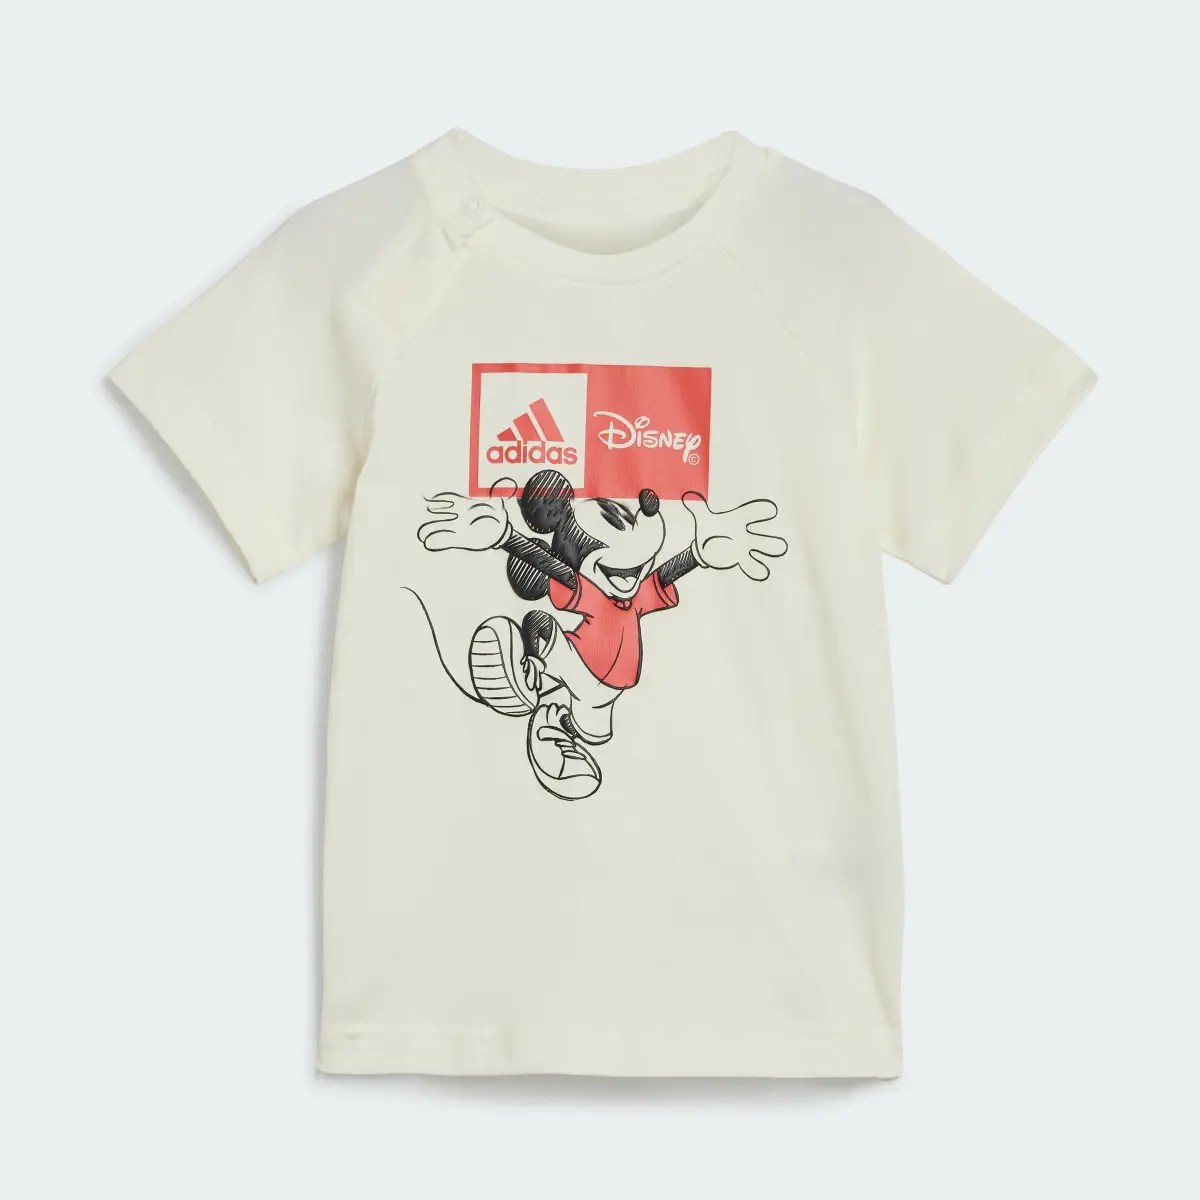 Adidas x Disney Mickey Mouse Gift Set. 3